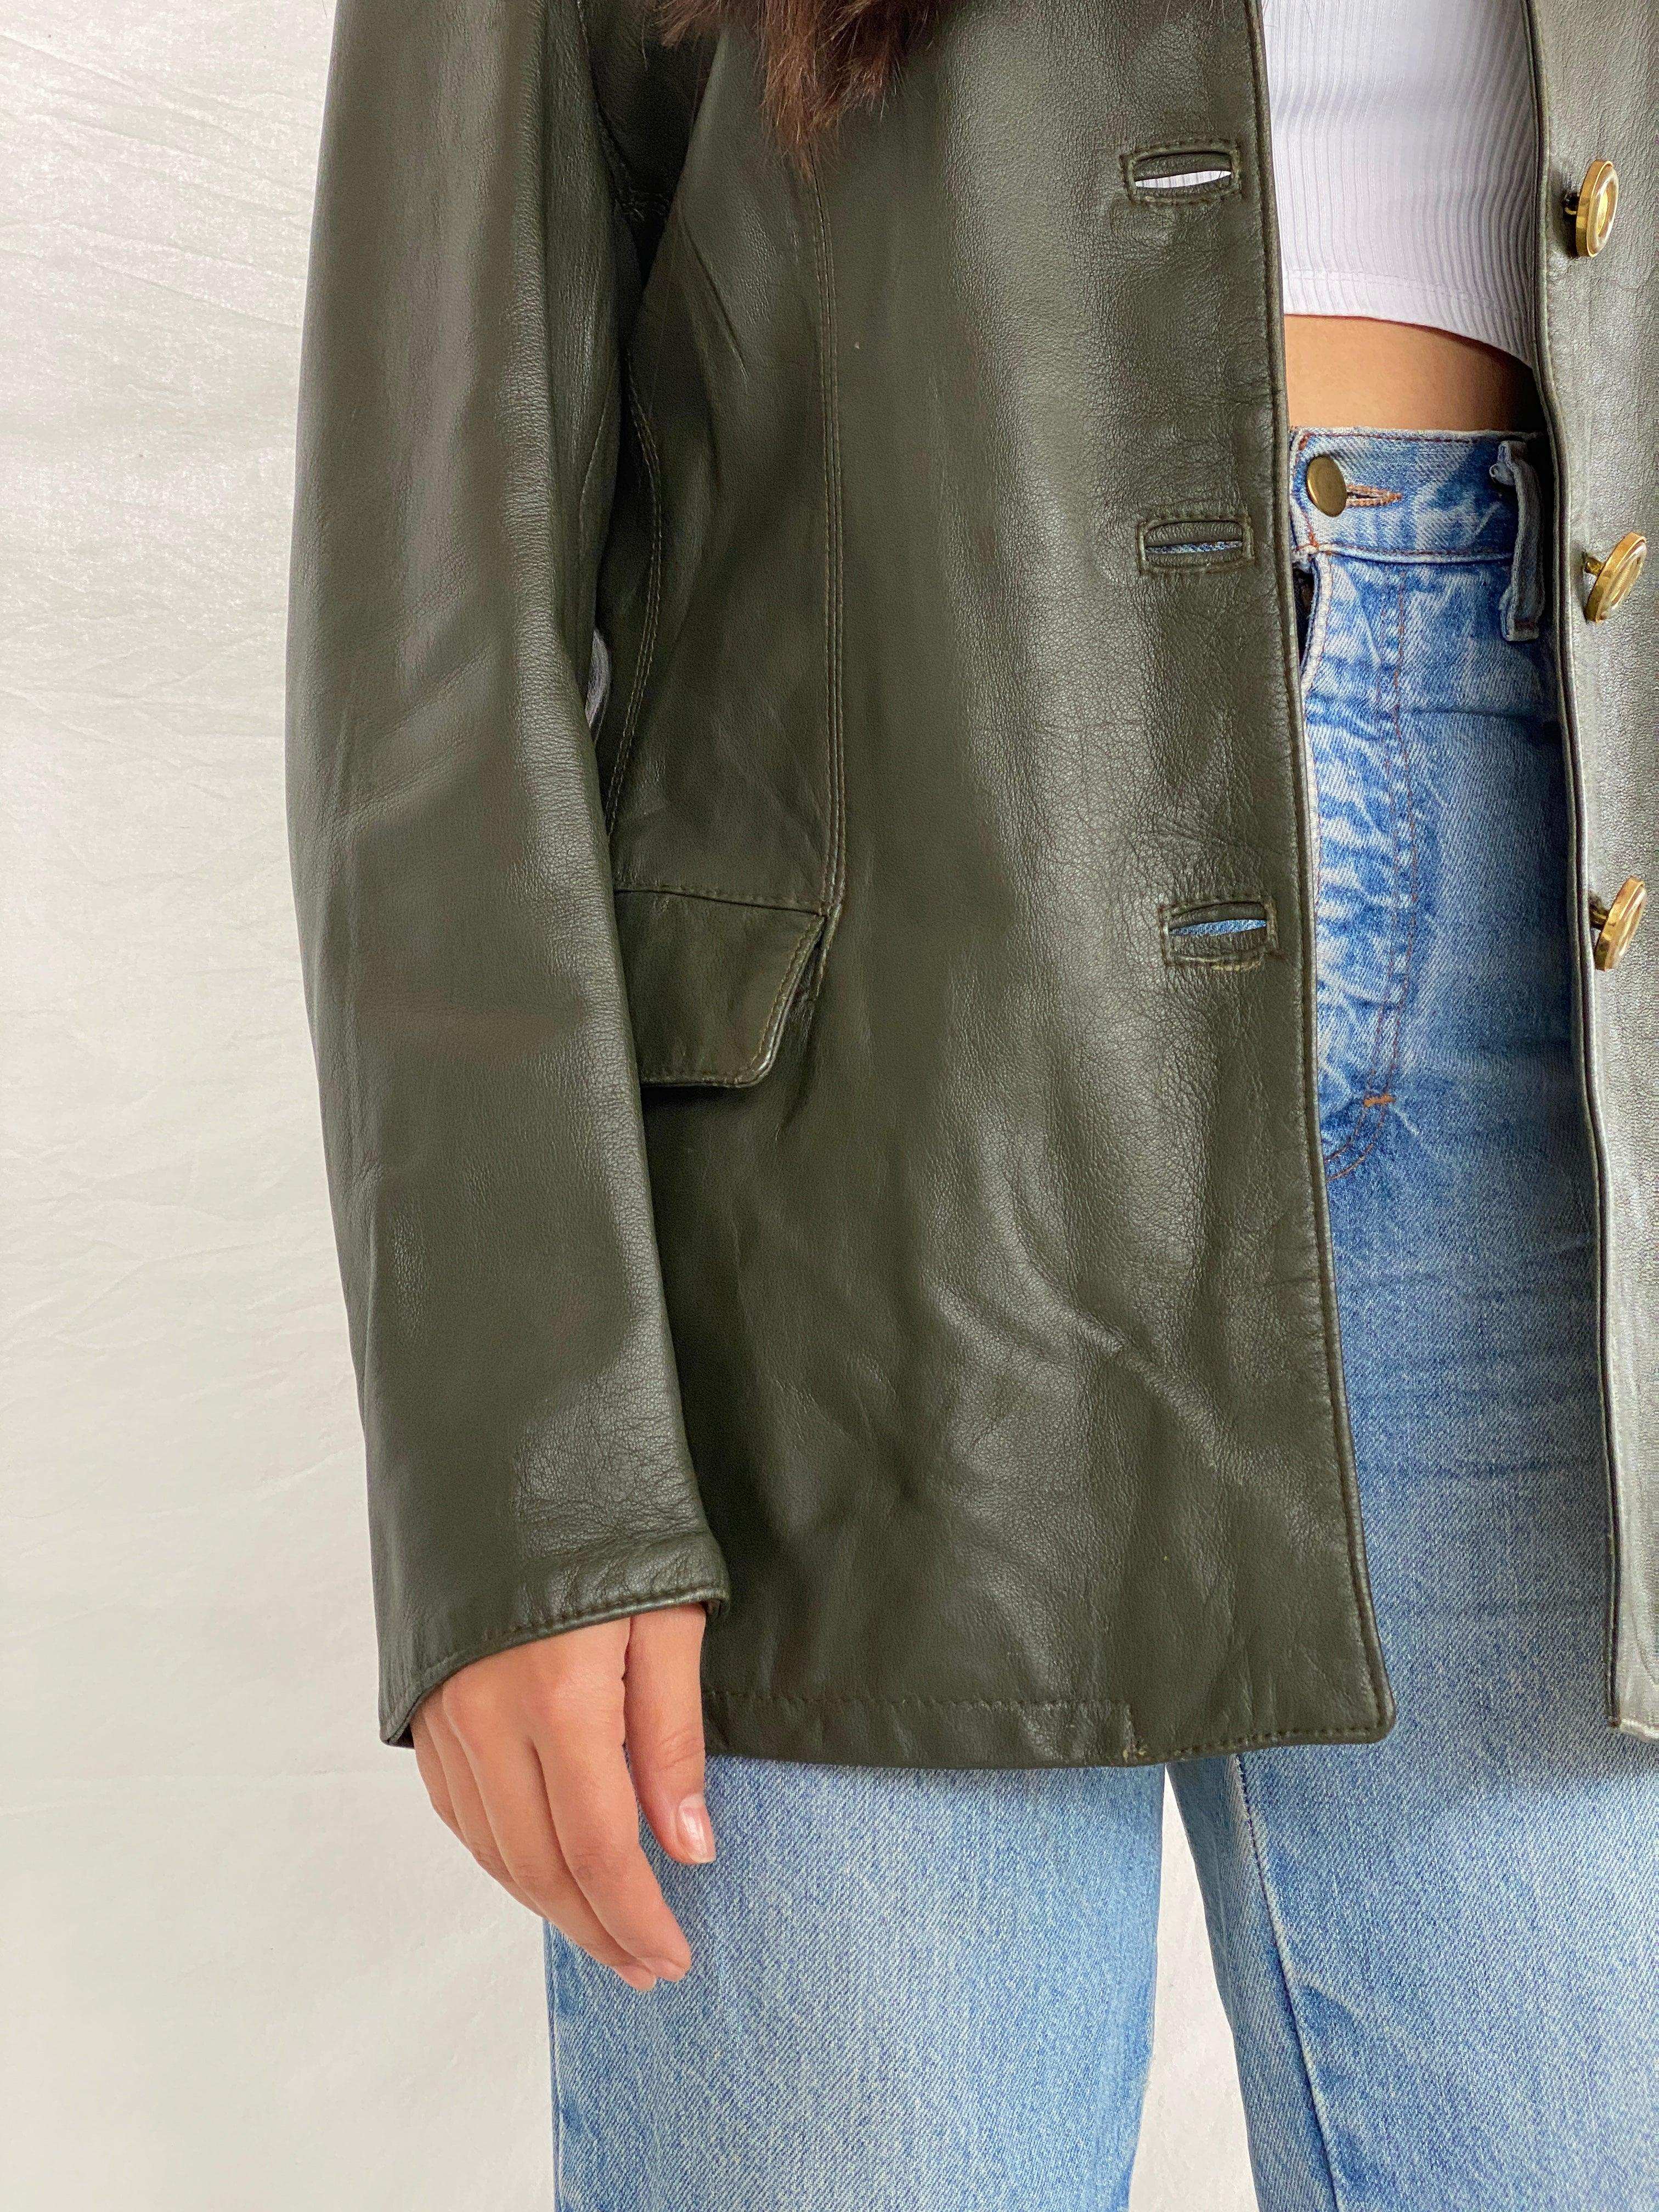 Vintage Guaranteed Original Genuine Leather Jacket - Balagan Vintage Leather Jacket 90s, Aseel, genuine leather, genuine leather jacket, leather jacket, NEW IN